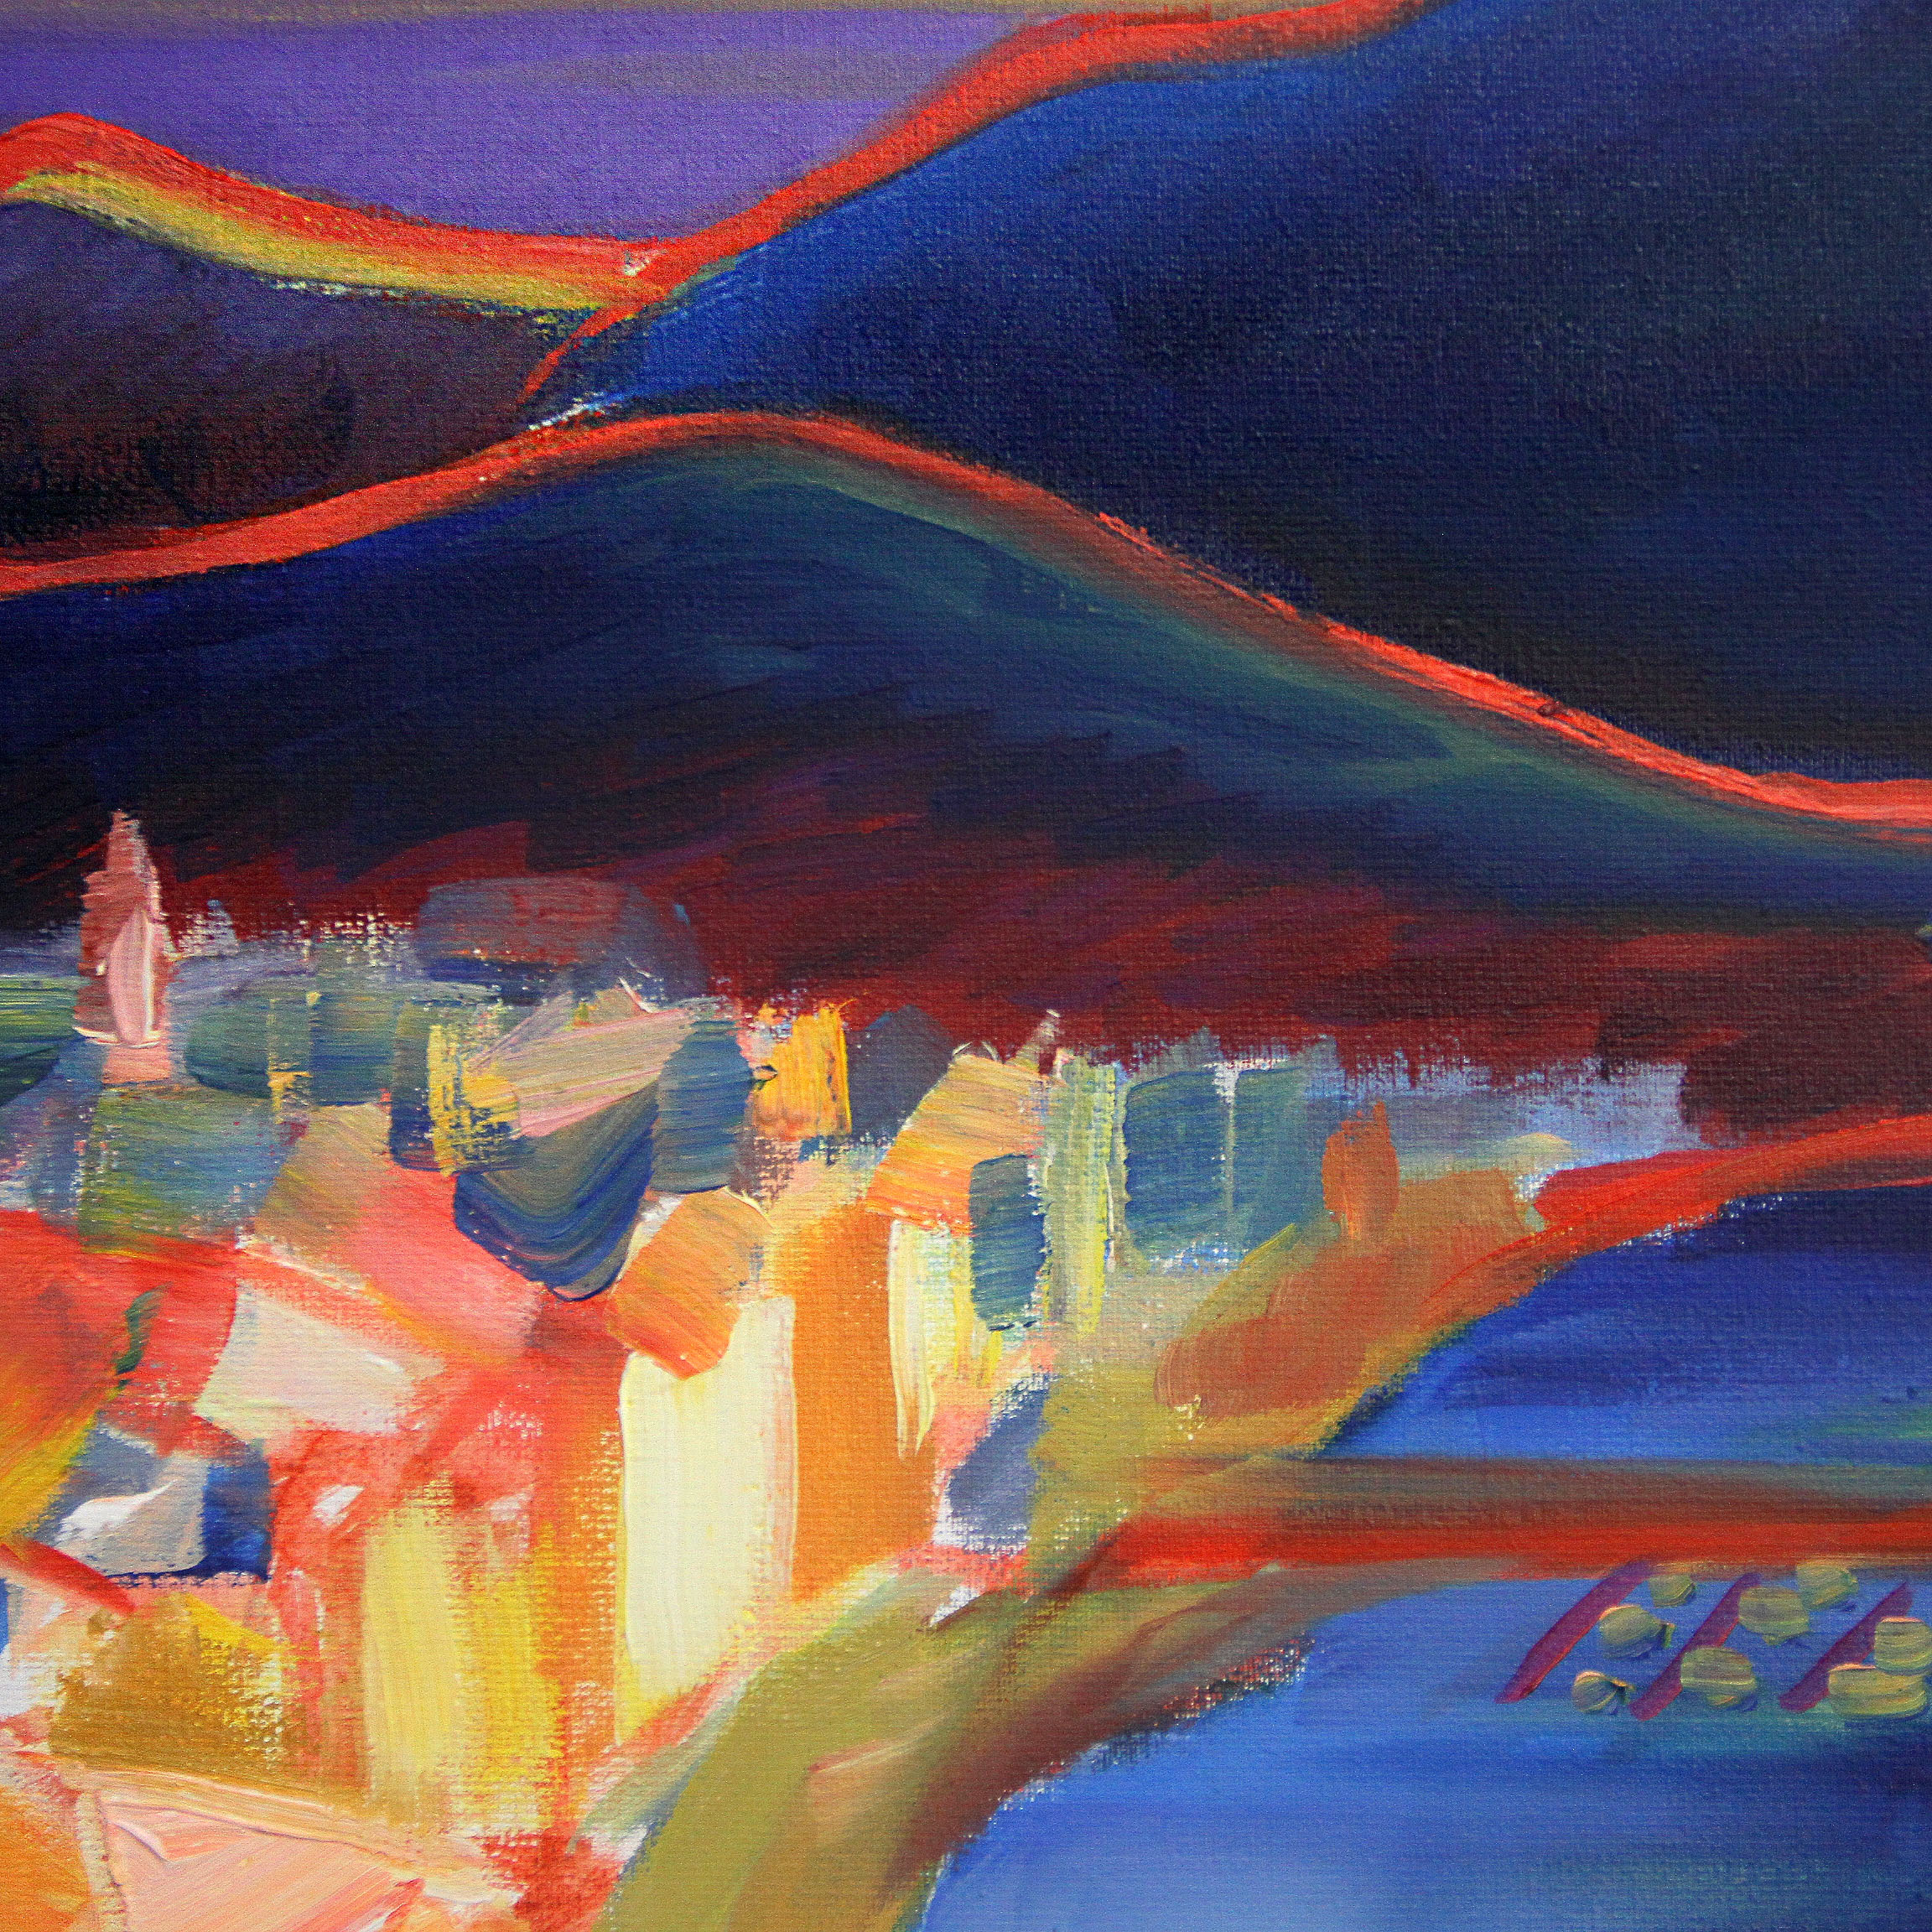 M. Cieśla: "Sunset in Monterosso al Mare", Original/Unikat, Expressionistisches Ölgemälde (A)